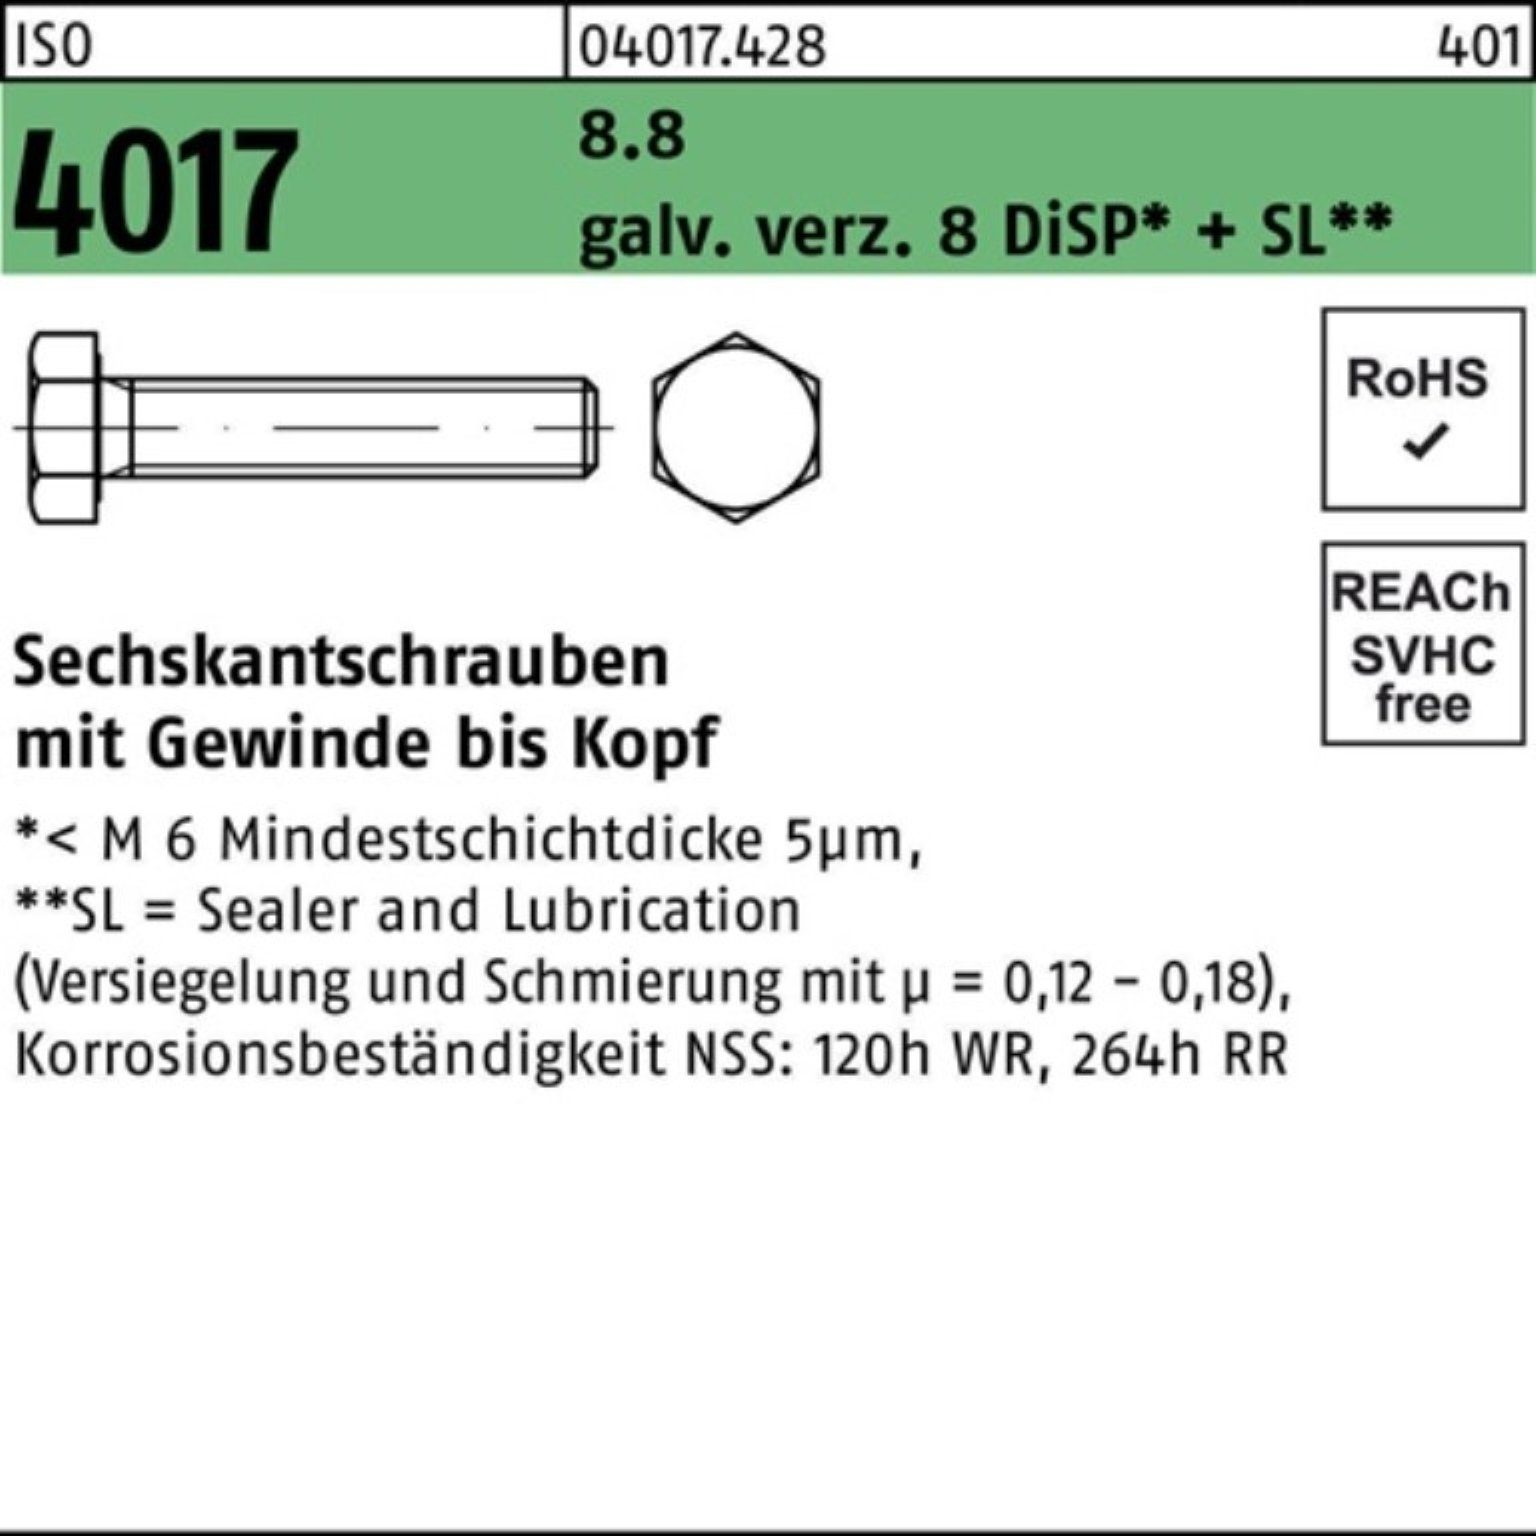 Bufab Sechskantschraube 100er Pack Sechskantschraube ISO 4017 VG M30x 100 8.8 galv.verz. 8 DiS